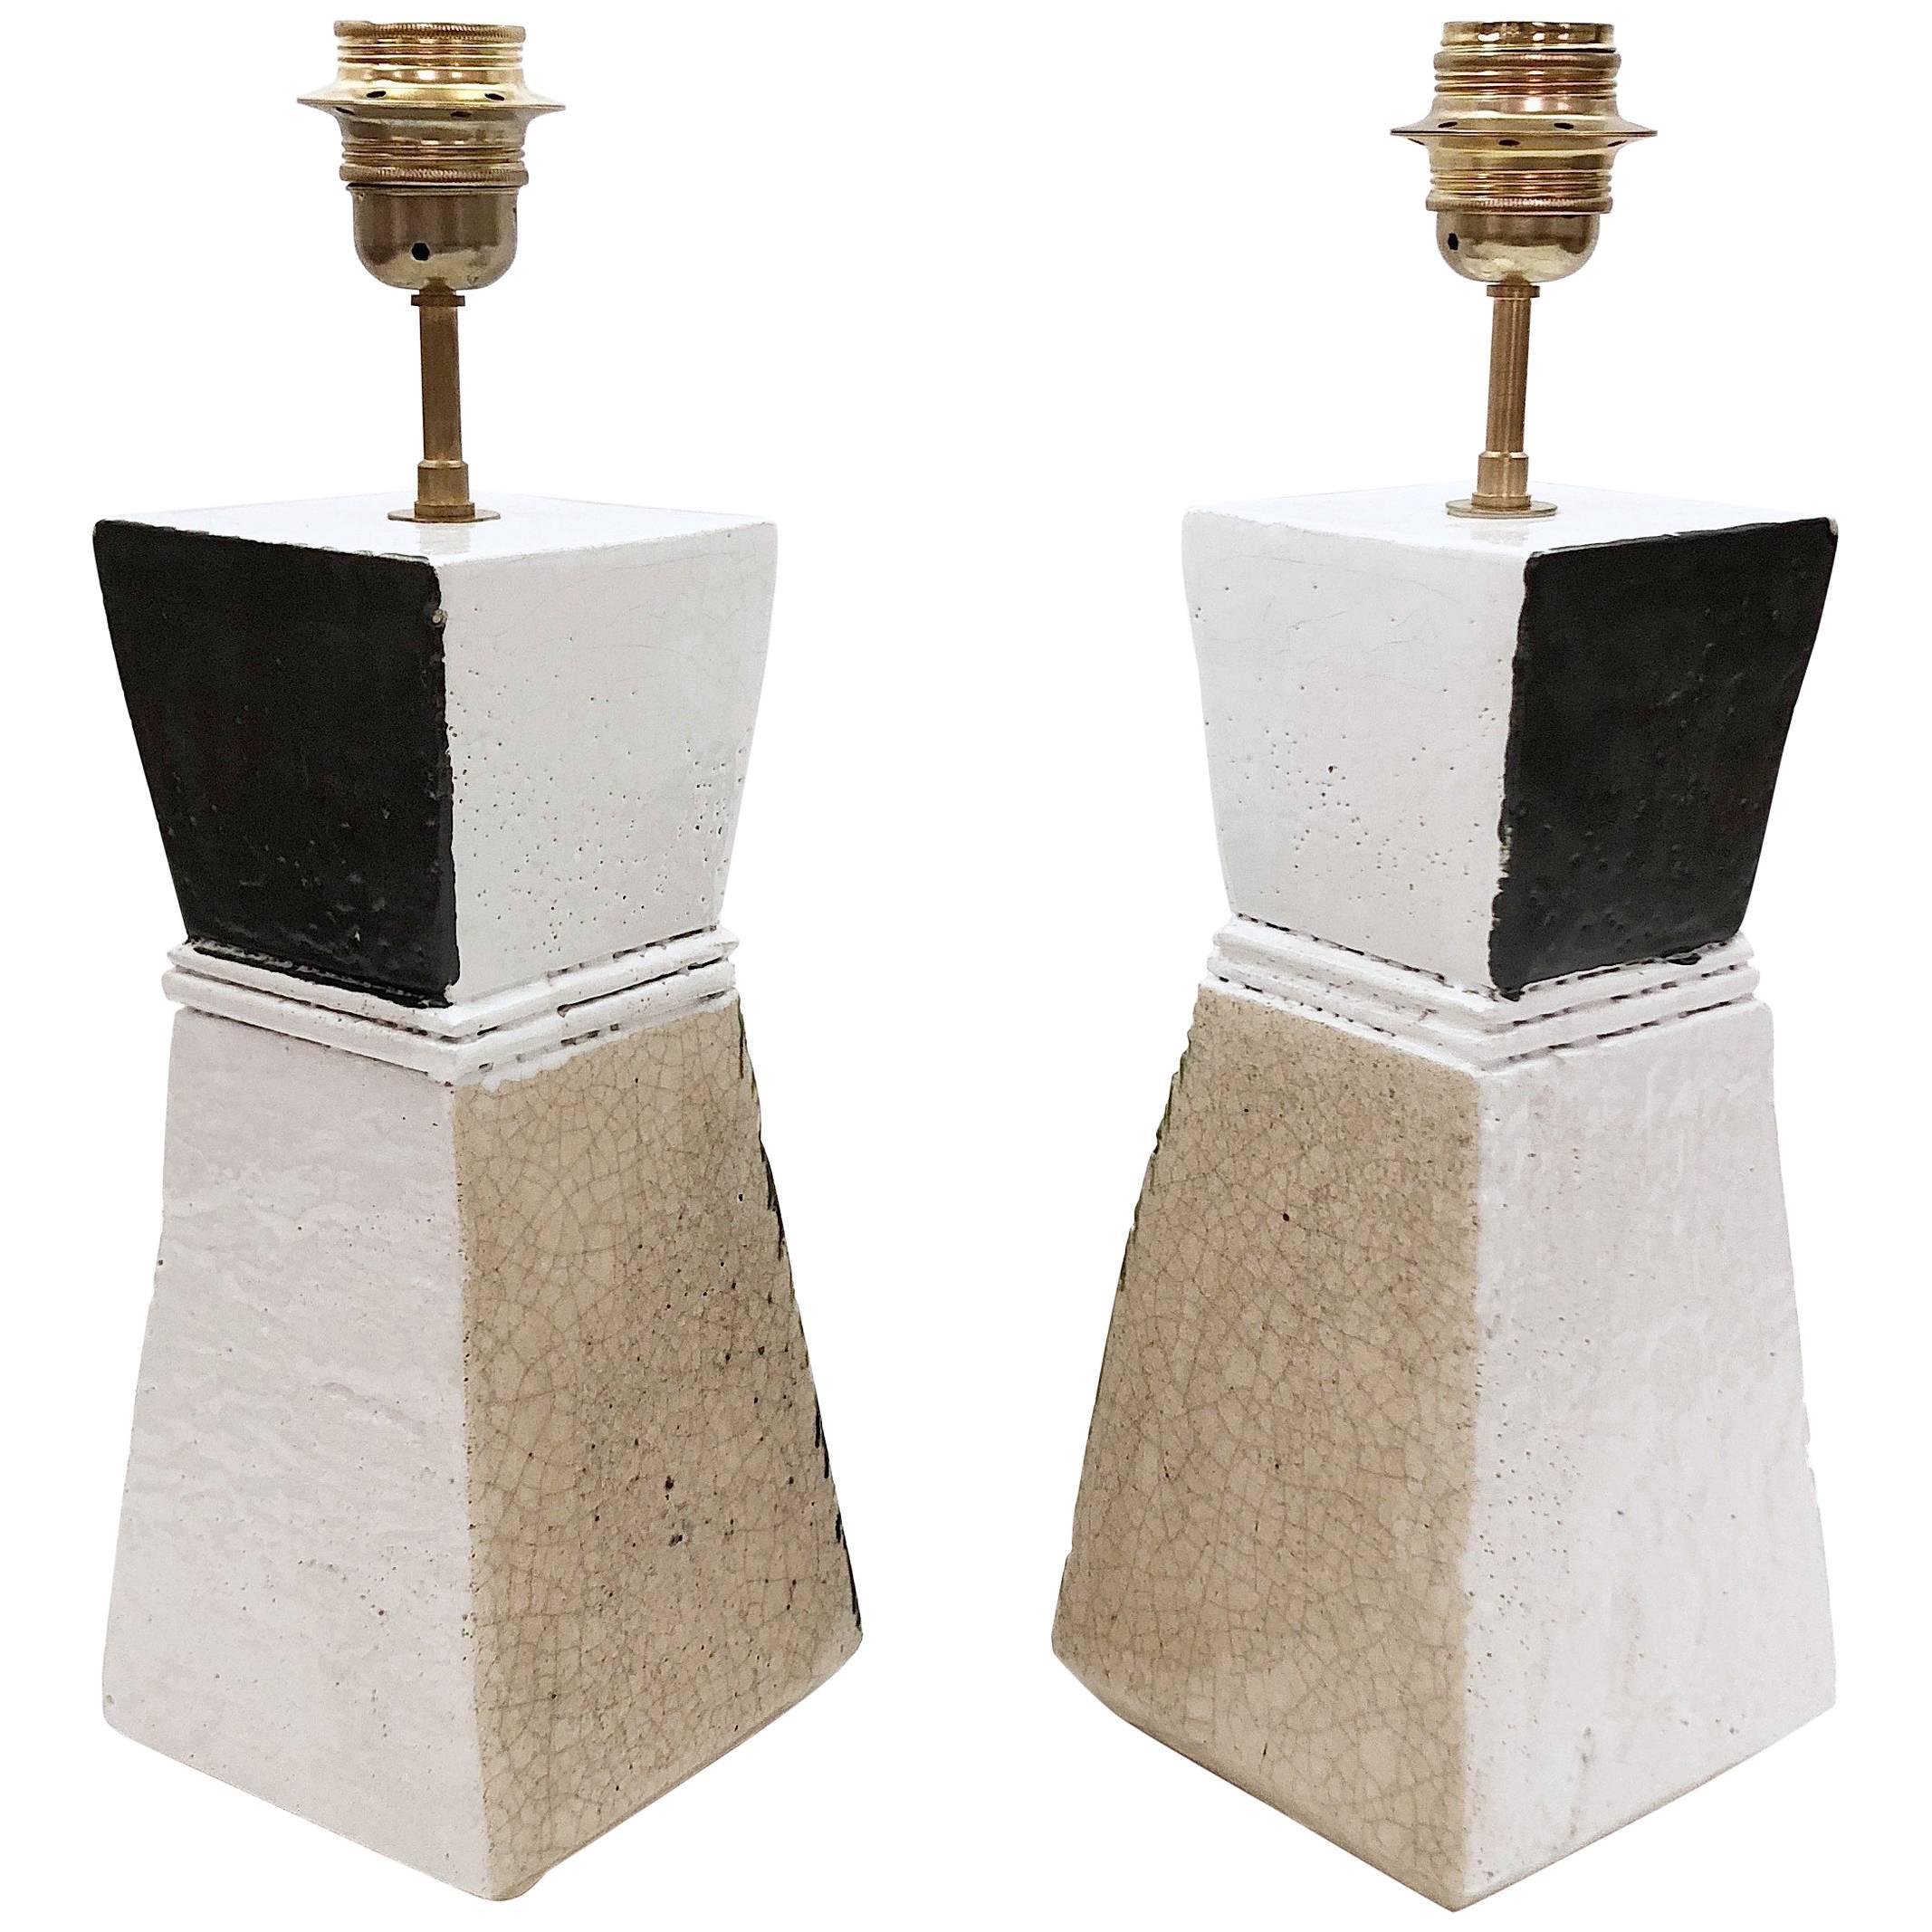 Salvatore Parisi, Pair of Ceramic Table Lamp Bases